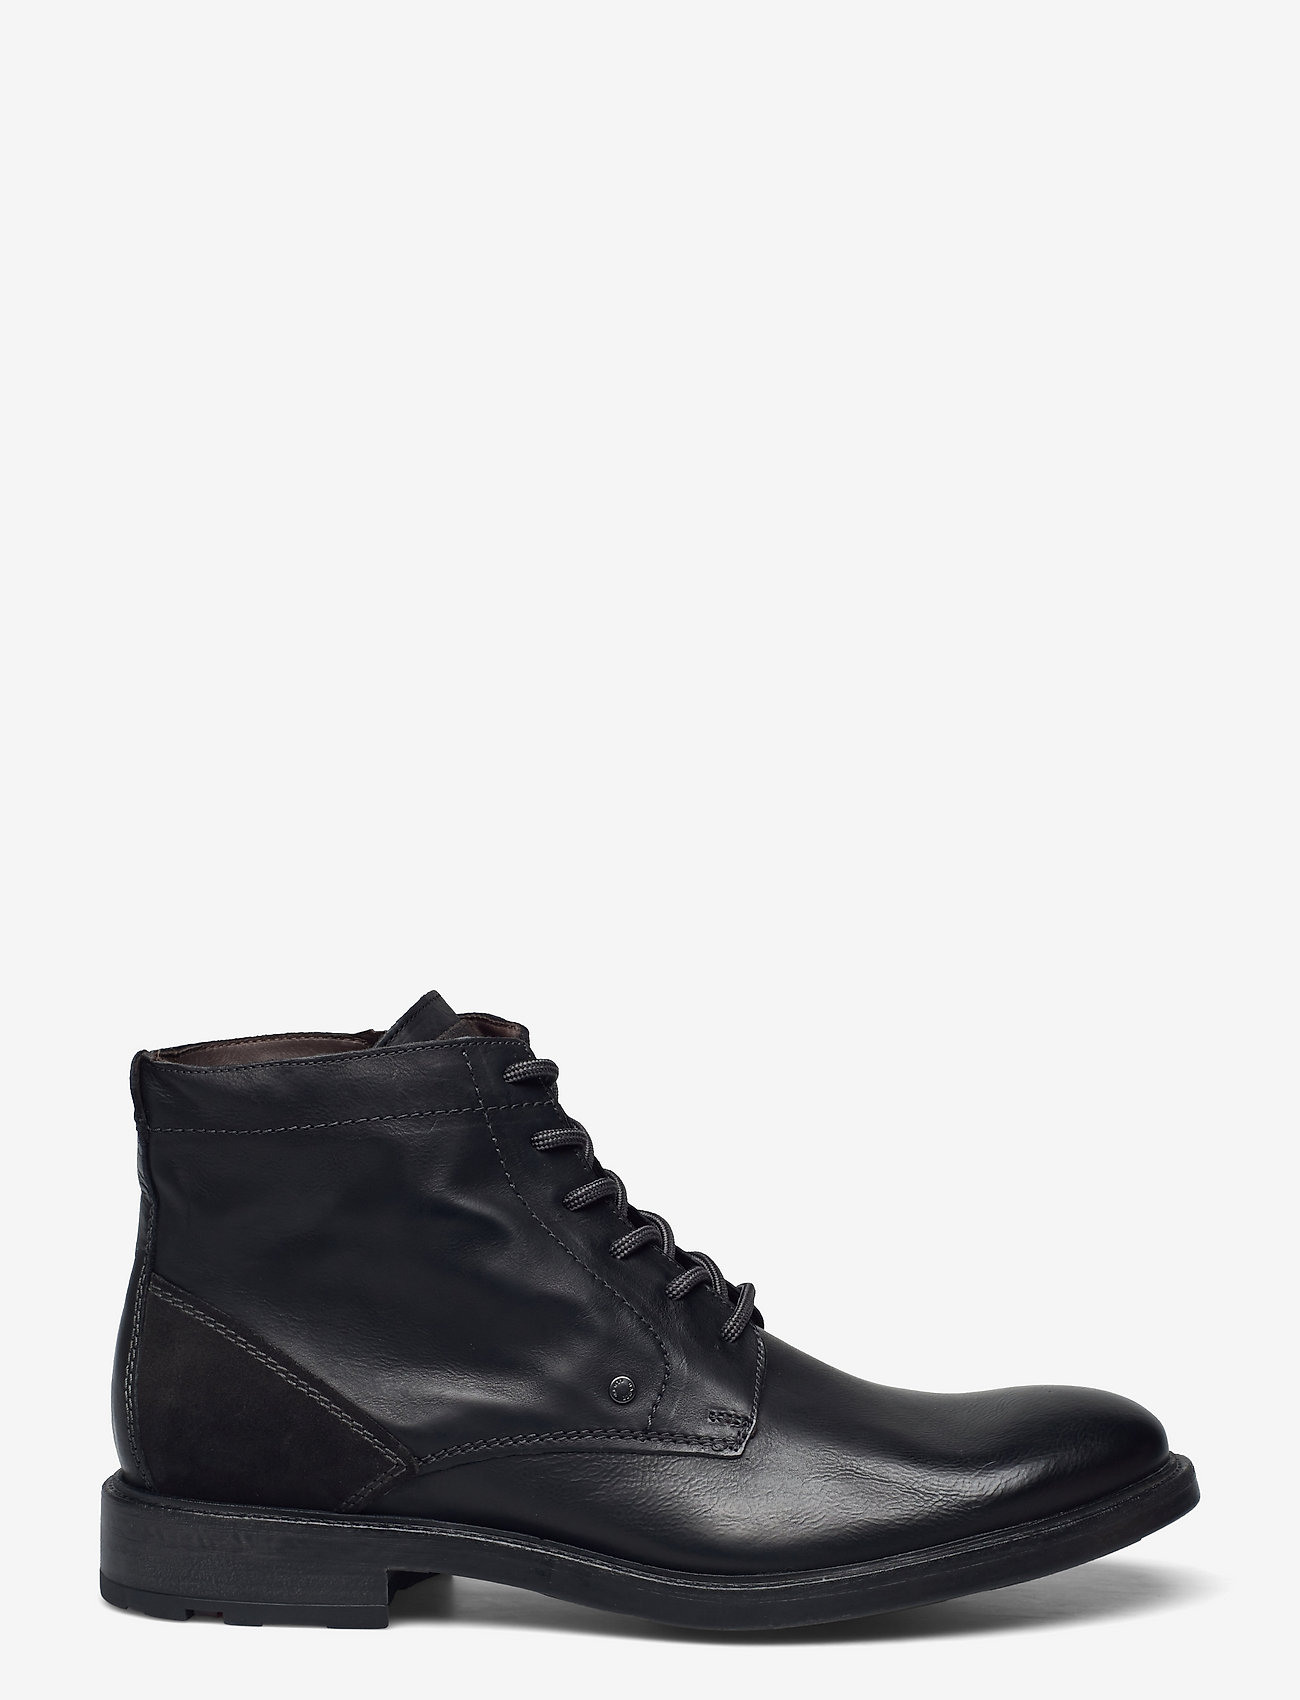 Lloyd Dumont - Laced boots | Boozt.com